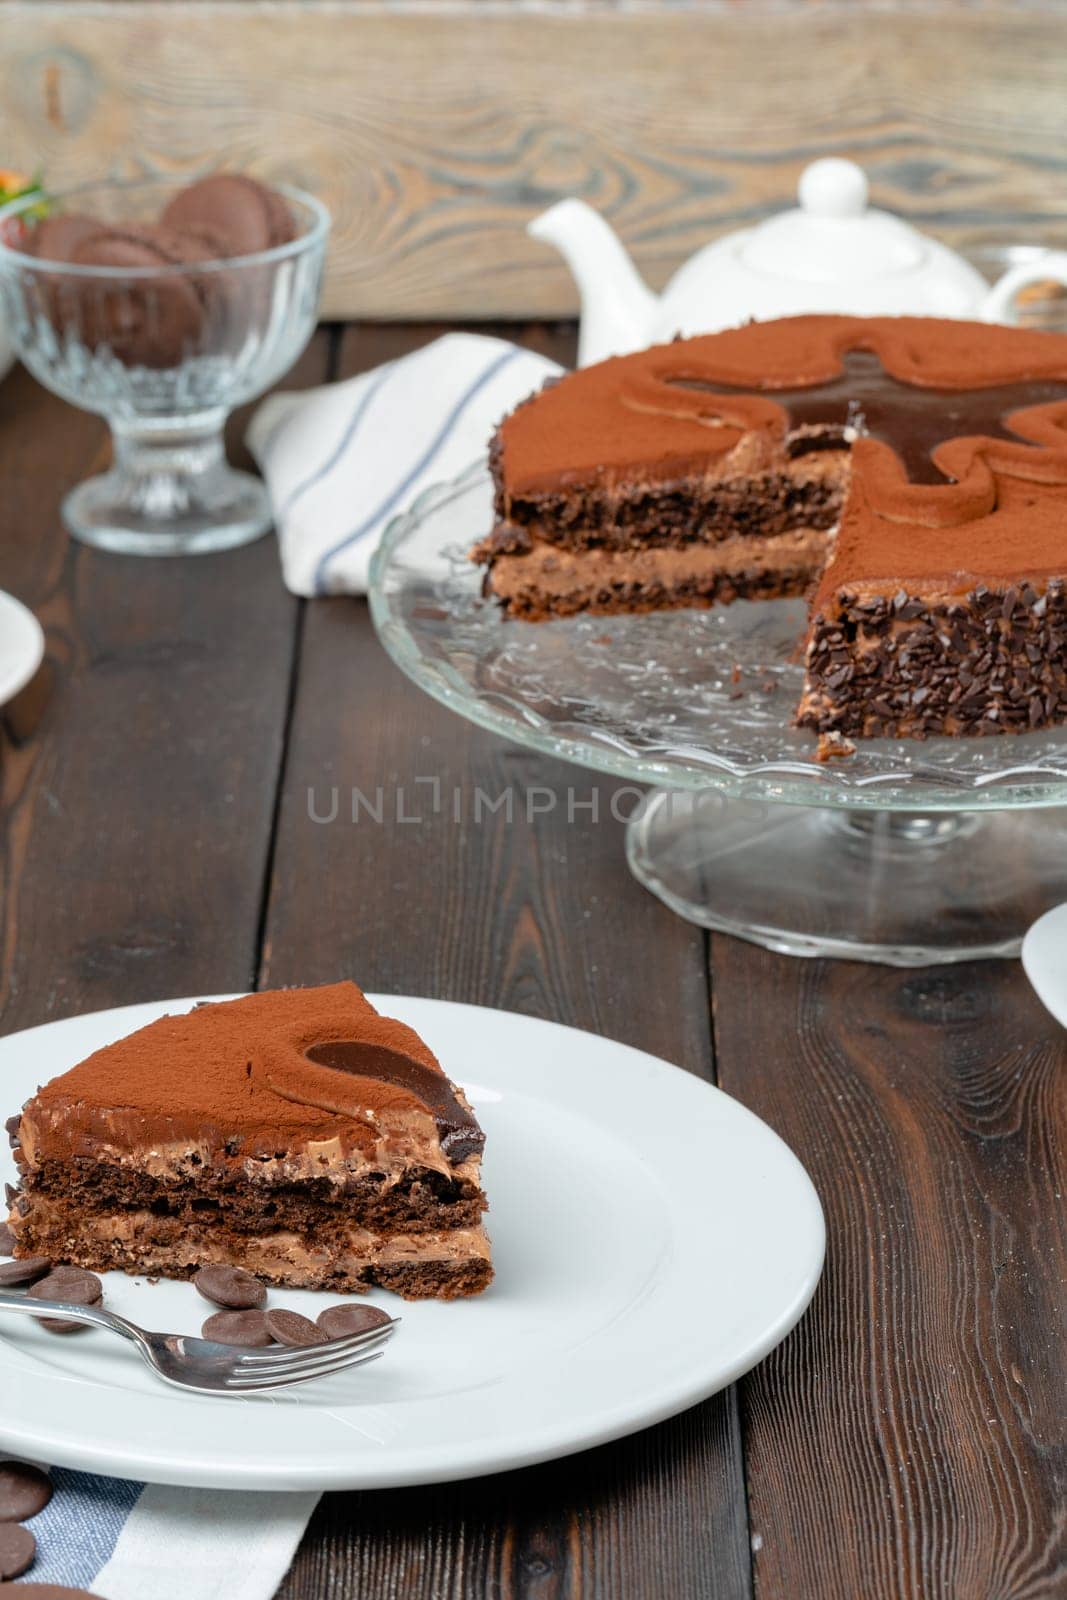 Chocolate cake with chocolate powder on top